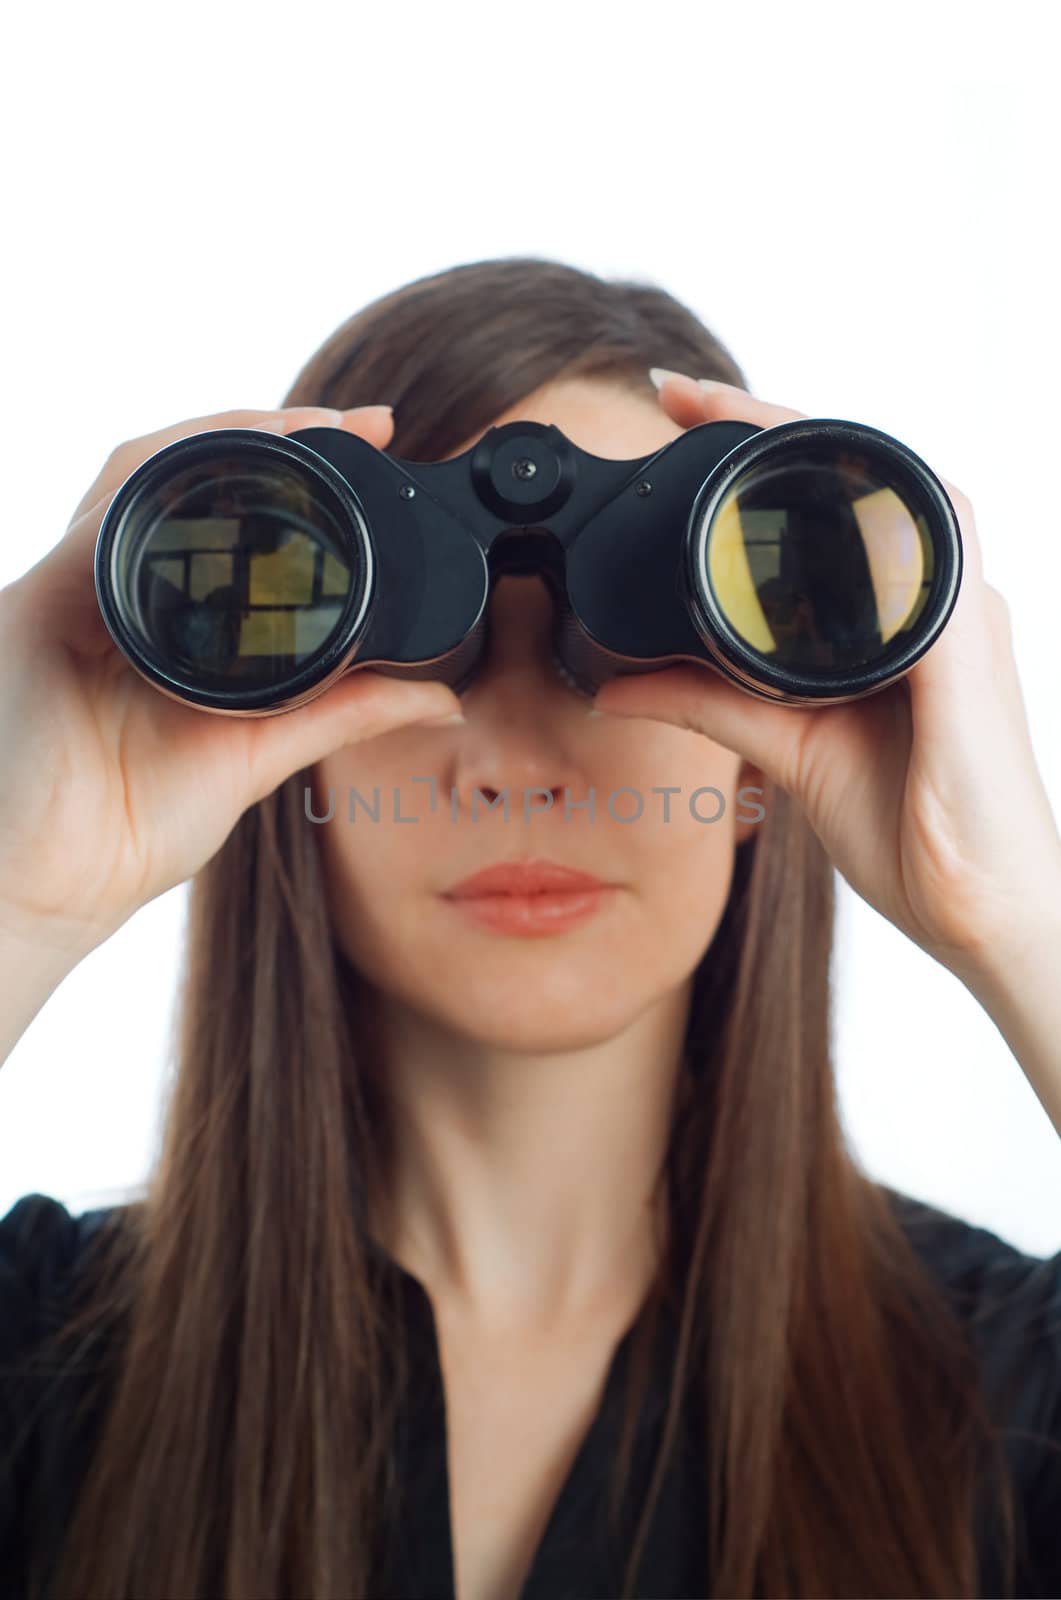 Business woman strategist with binoculars